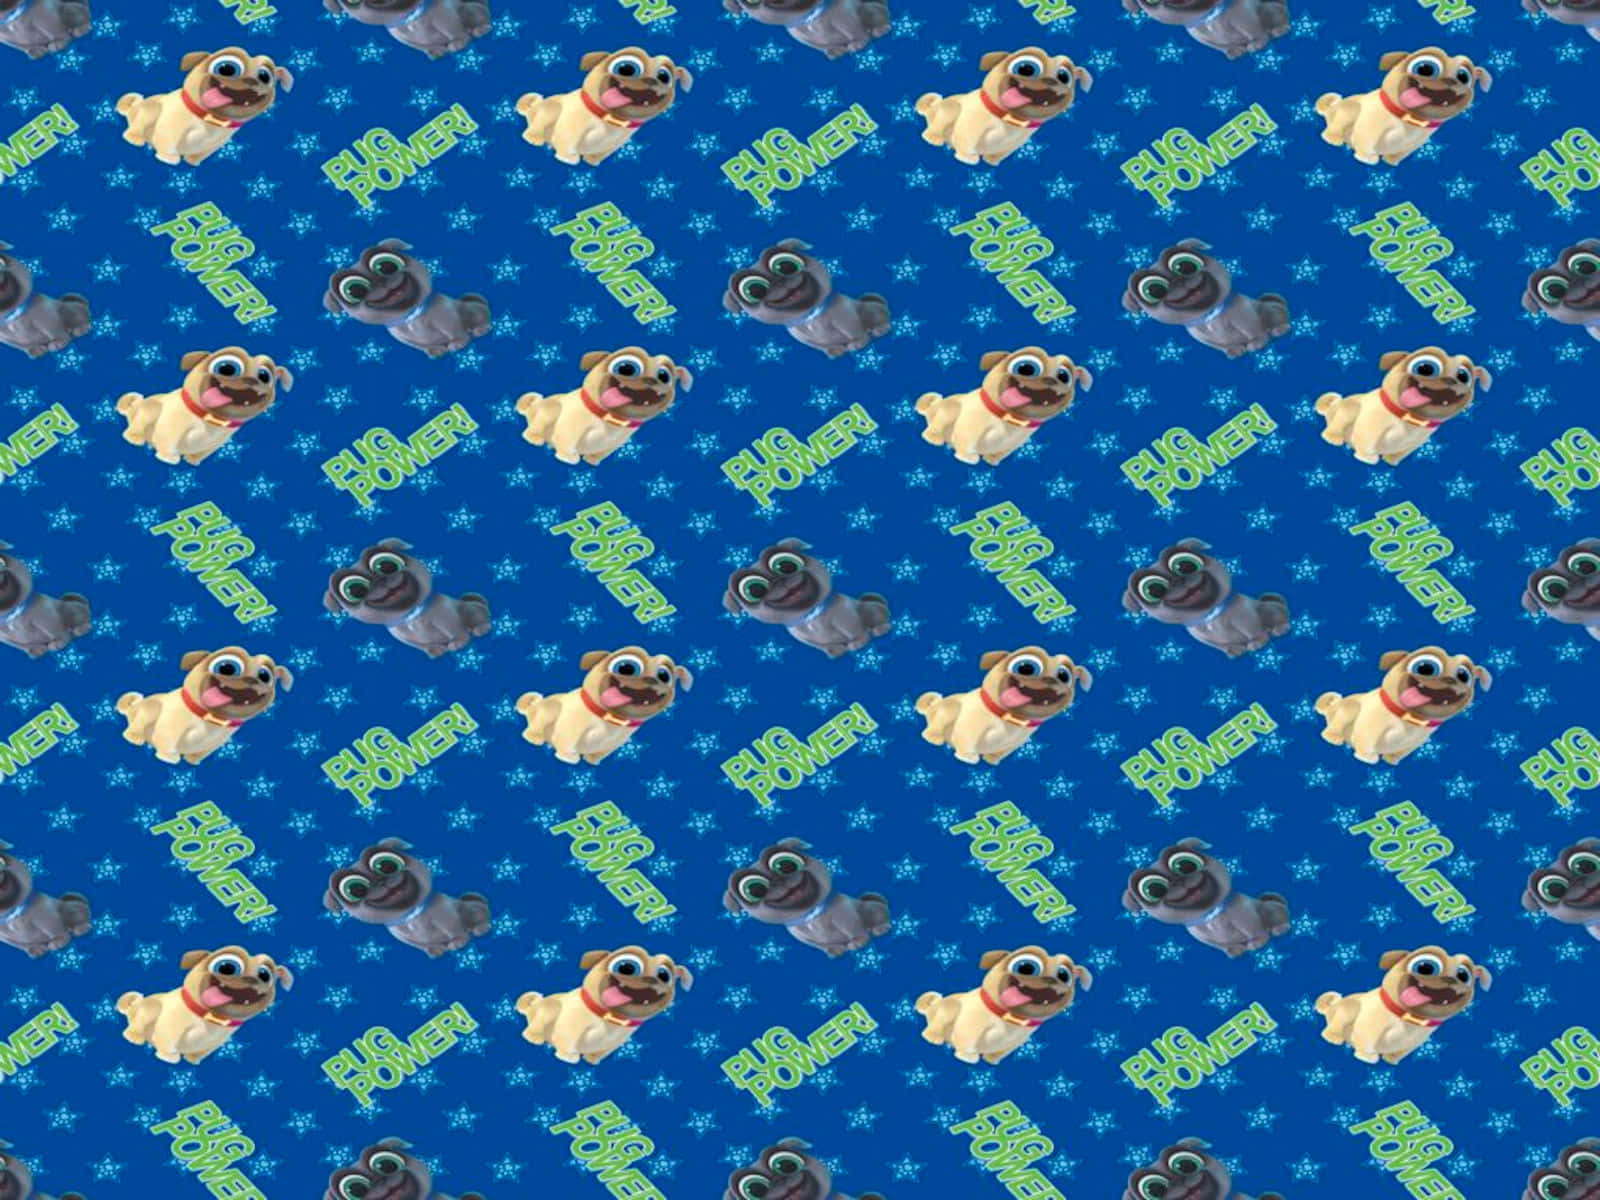 Puppy Dog Pals Patterned Wallpaper